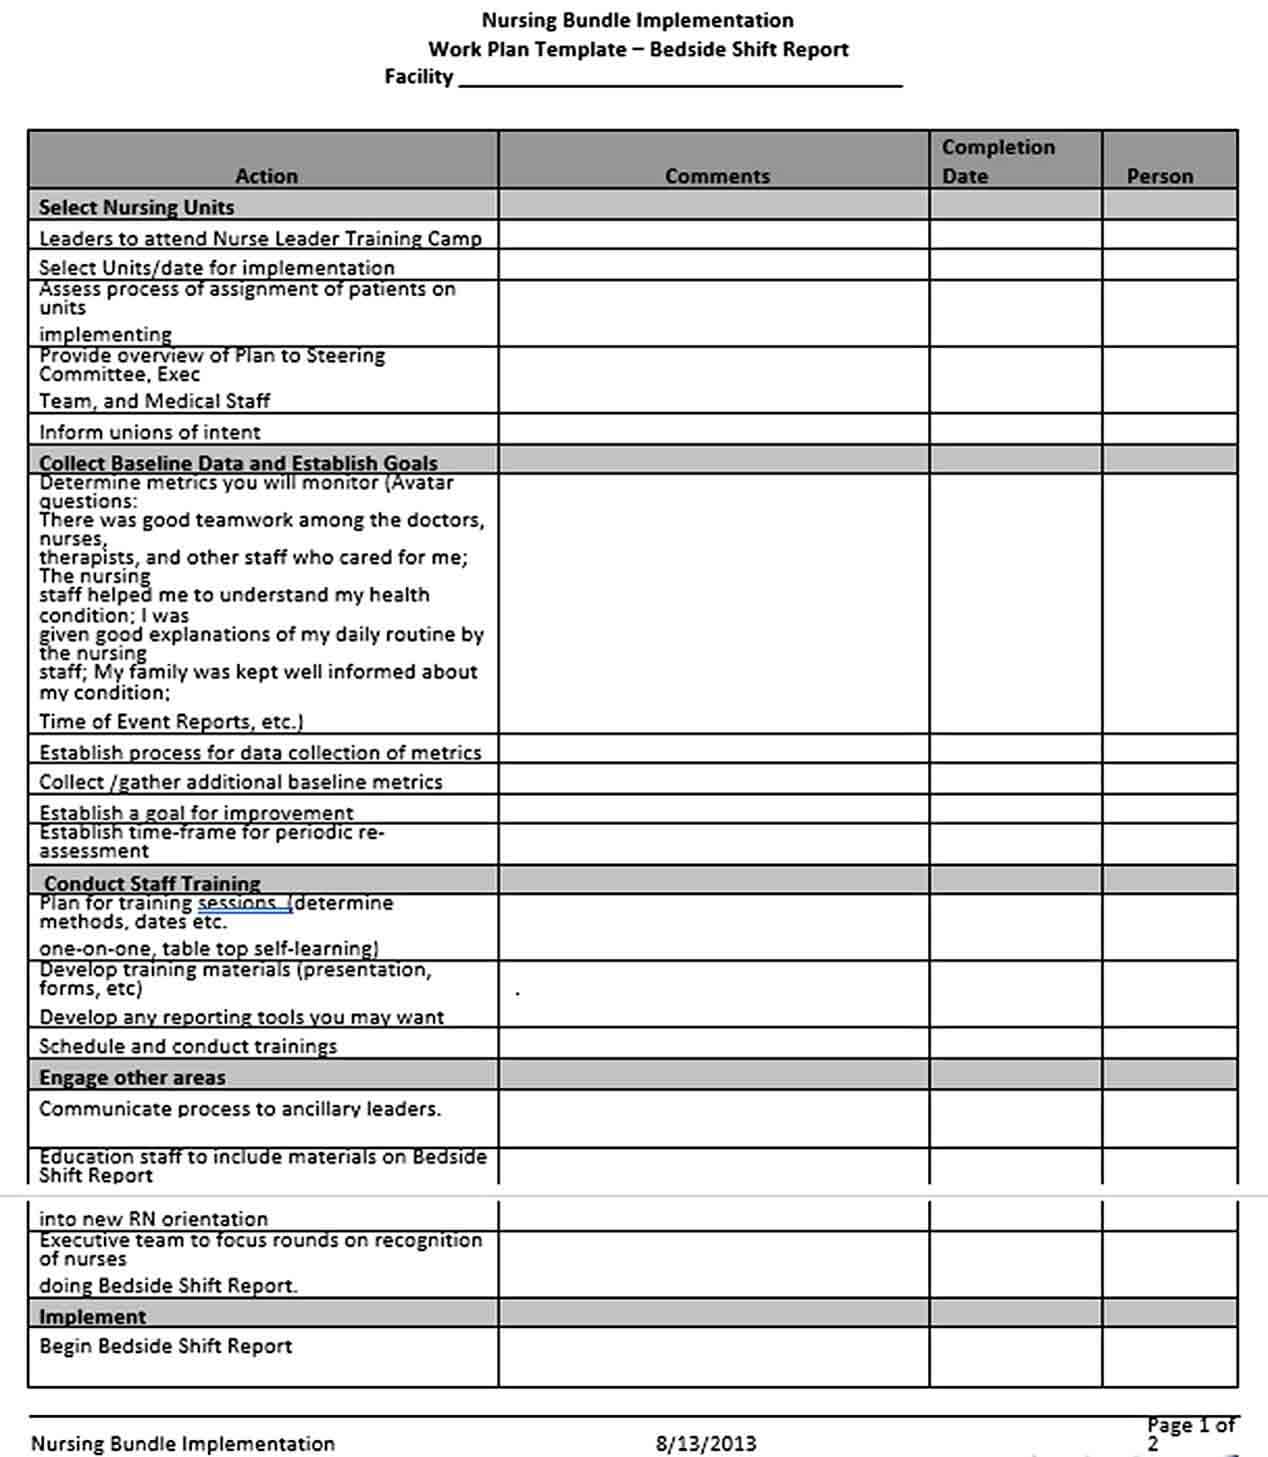 Nursing Shift Report Work ScheduleTemplate Free Download